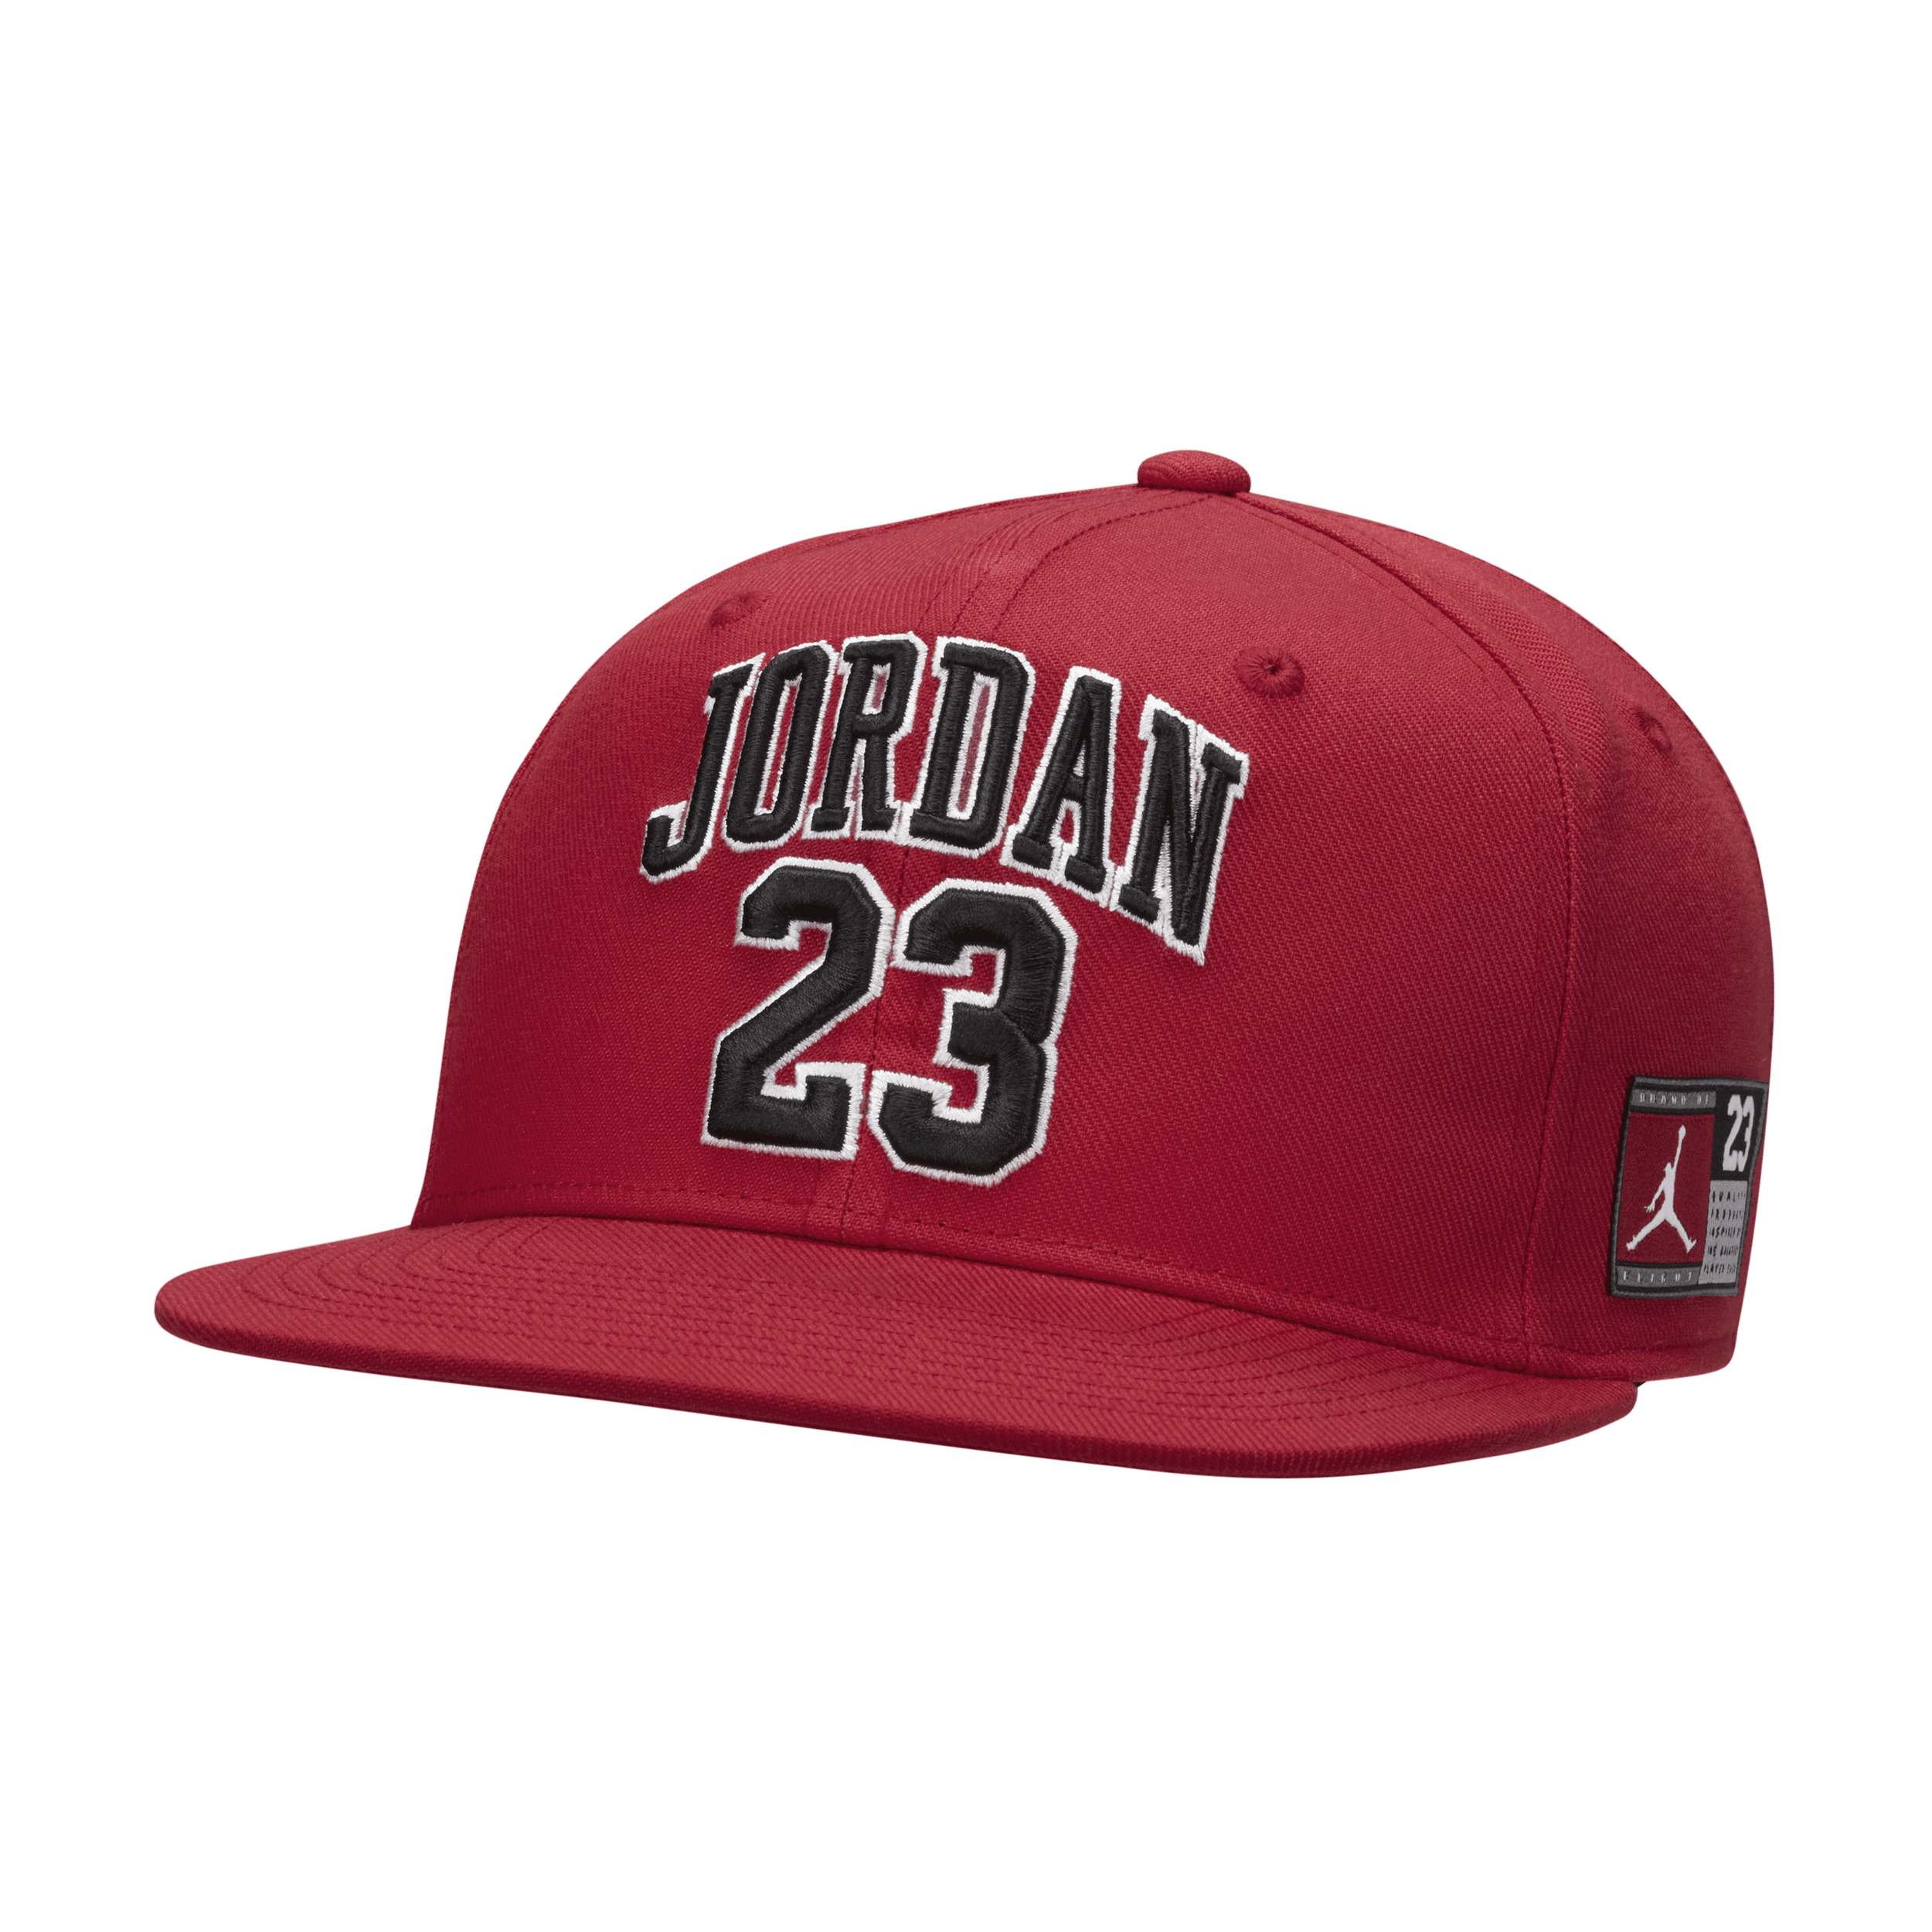 Jordan Jersey Flat Brim Cap kinderpet Rood